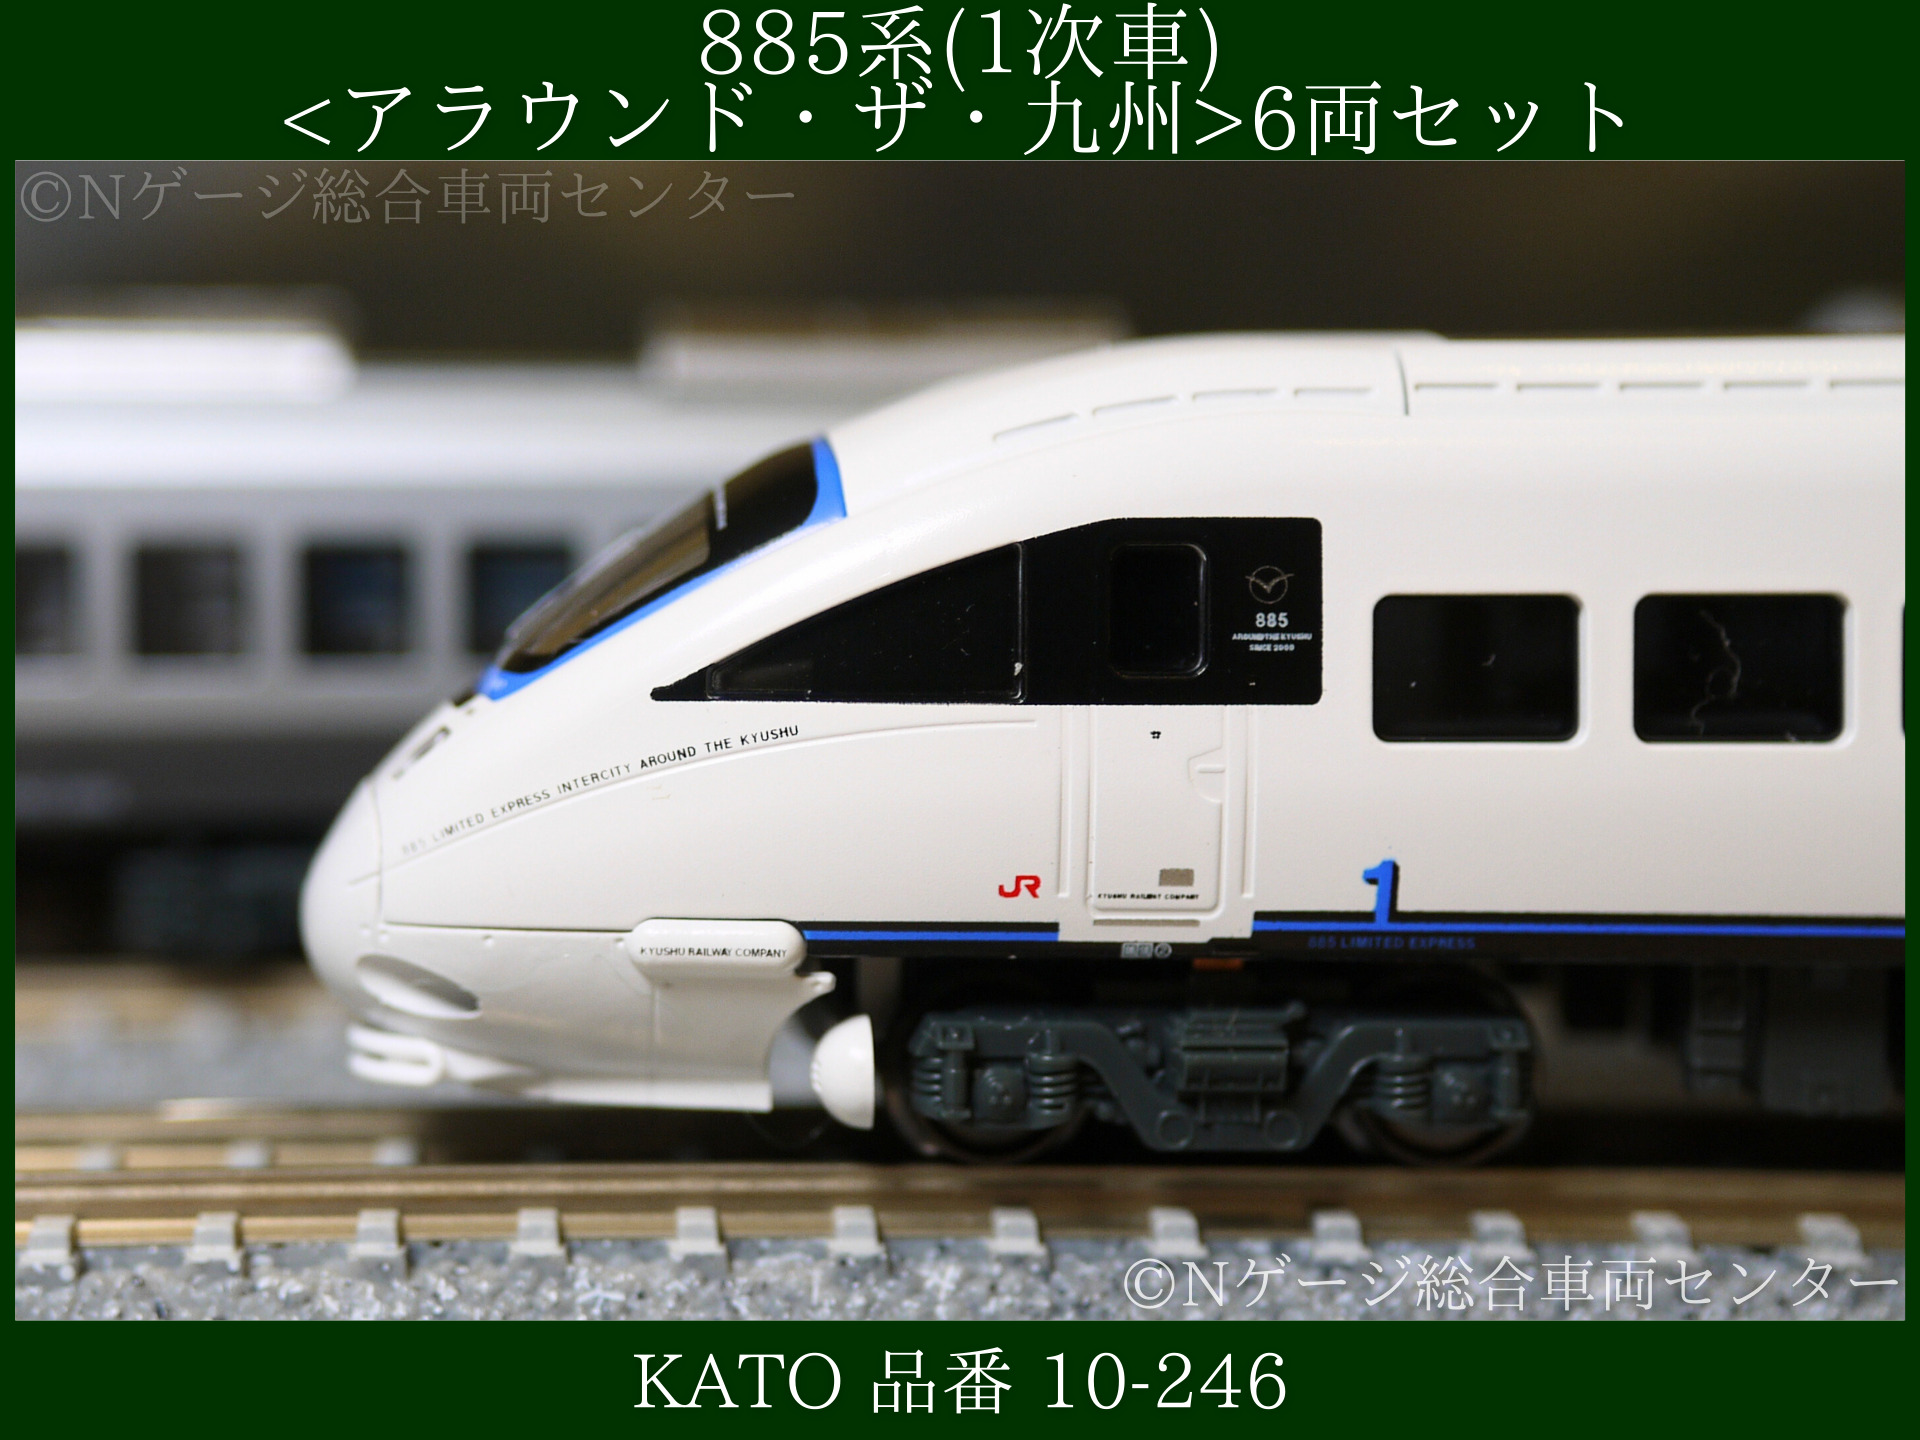 KATO 885系(かもめ型) アラウンド･ザ･九州 6両基本セット